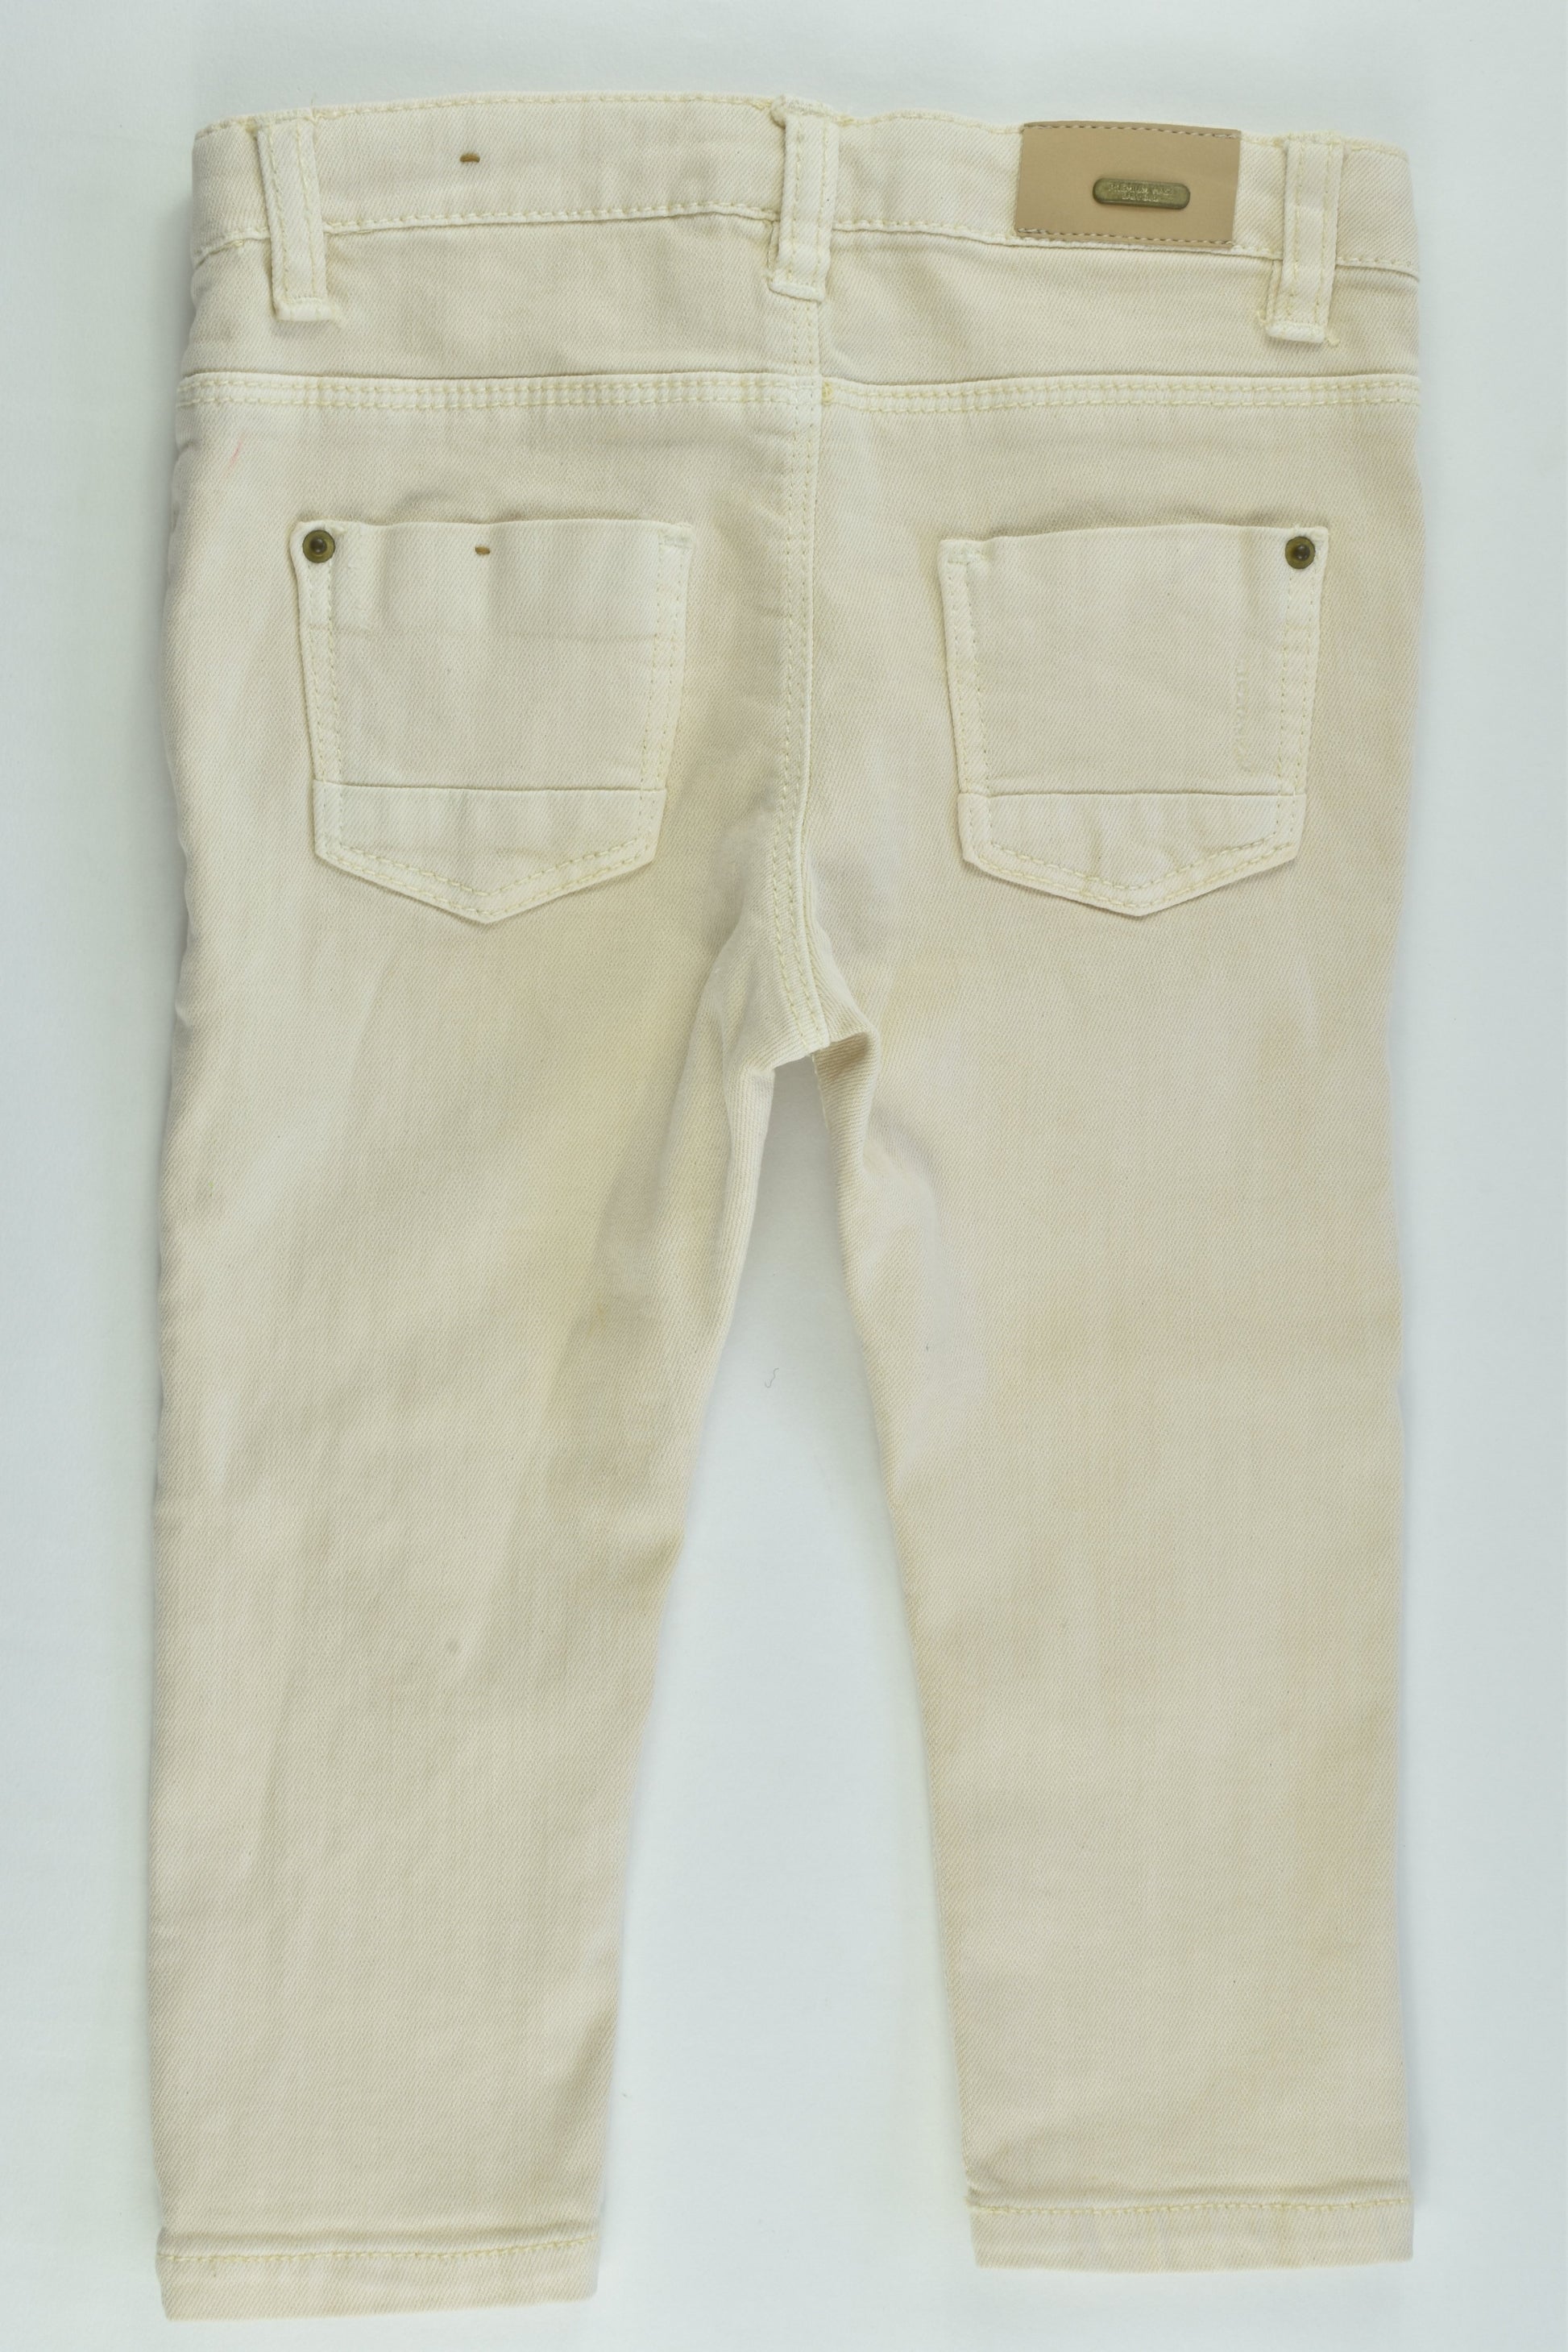 Zara Size 0 (9/12 months, 80 cm) Stretchy Pants